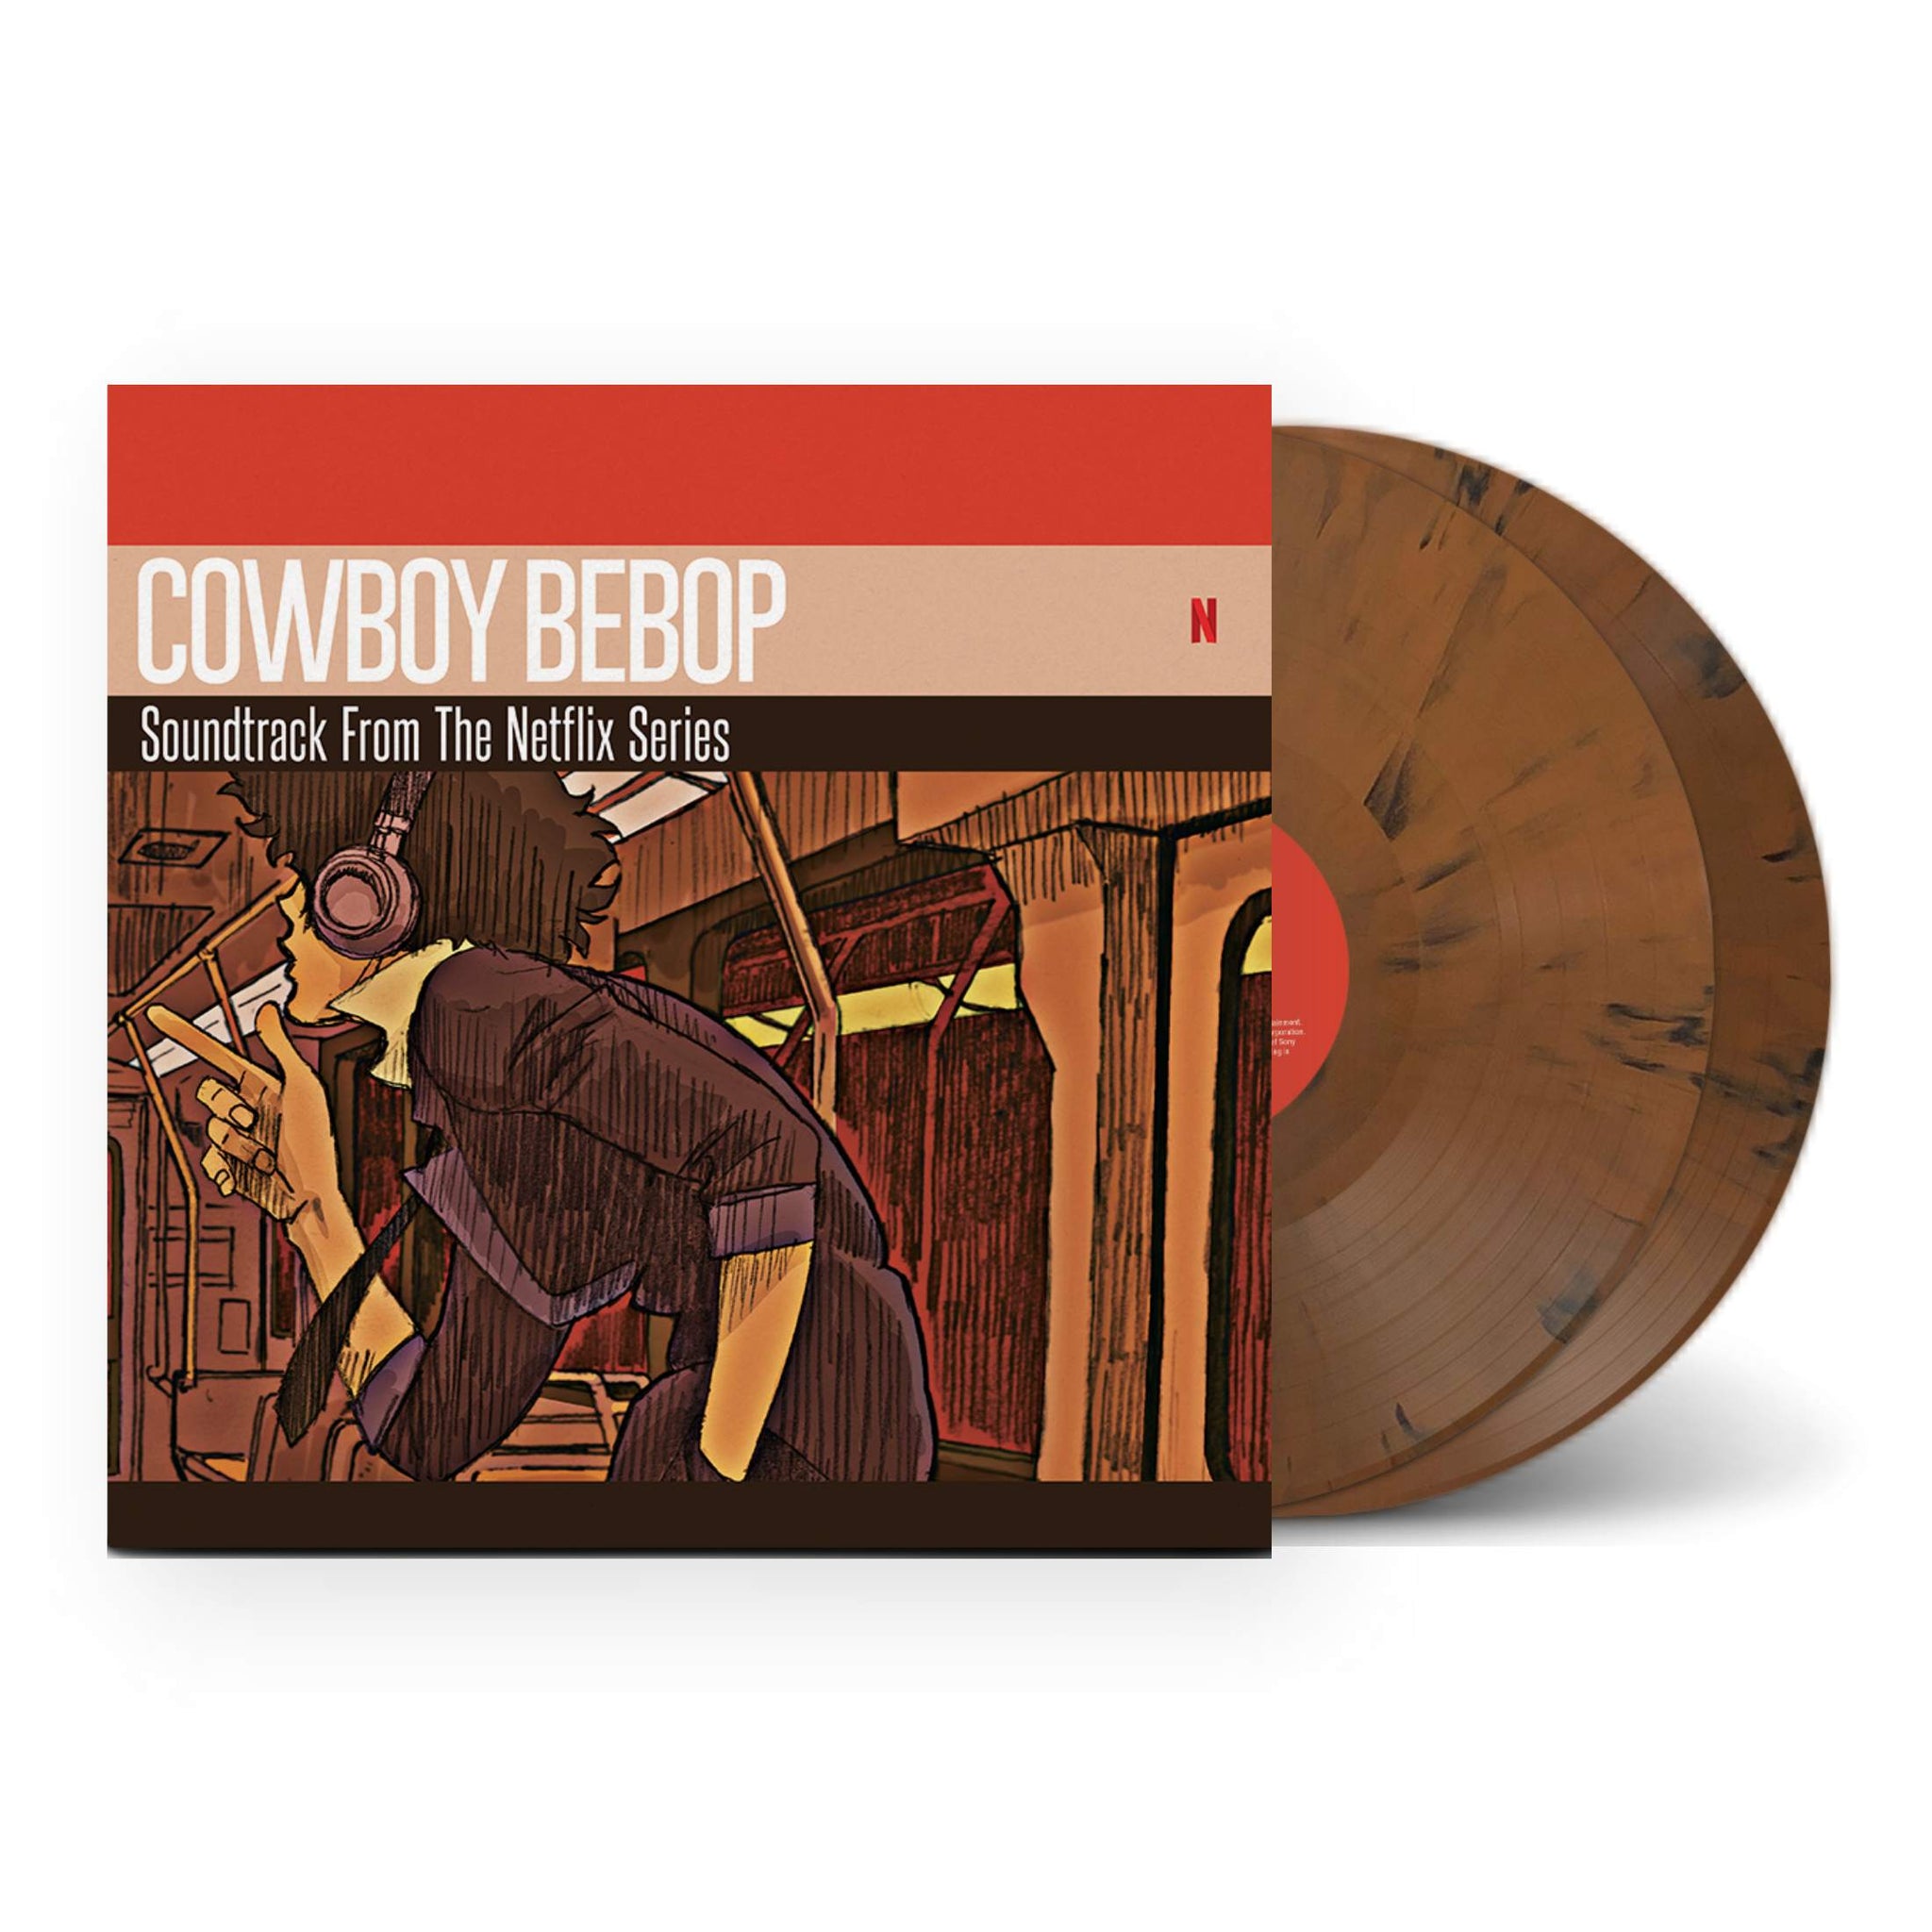 Cowboy Bebop (Original Series Soundtrack) LP by SEATBELTS (Orange Vinyl)